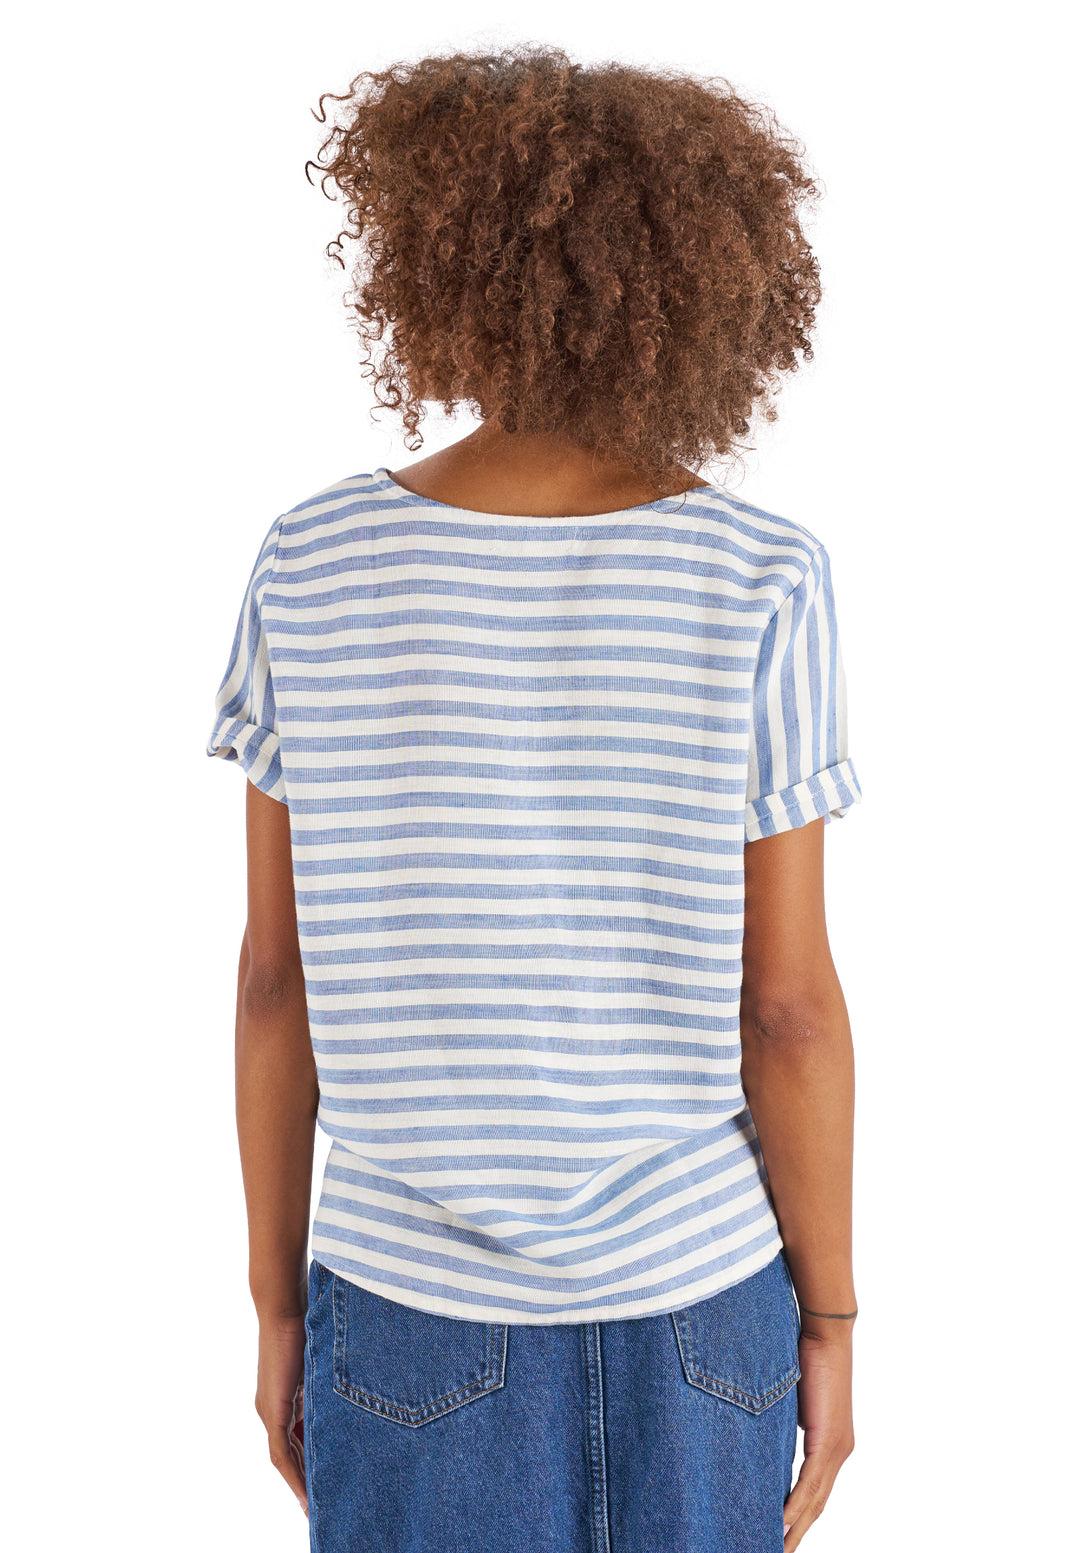 Teena Thick Blue Stripes, Linen T-Shirt Top